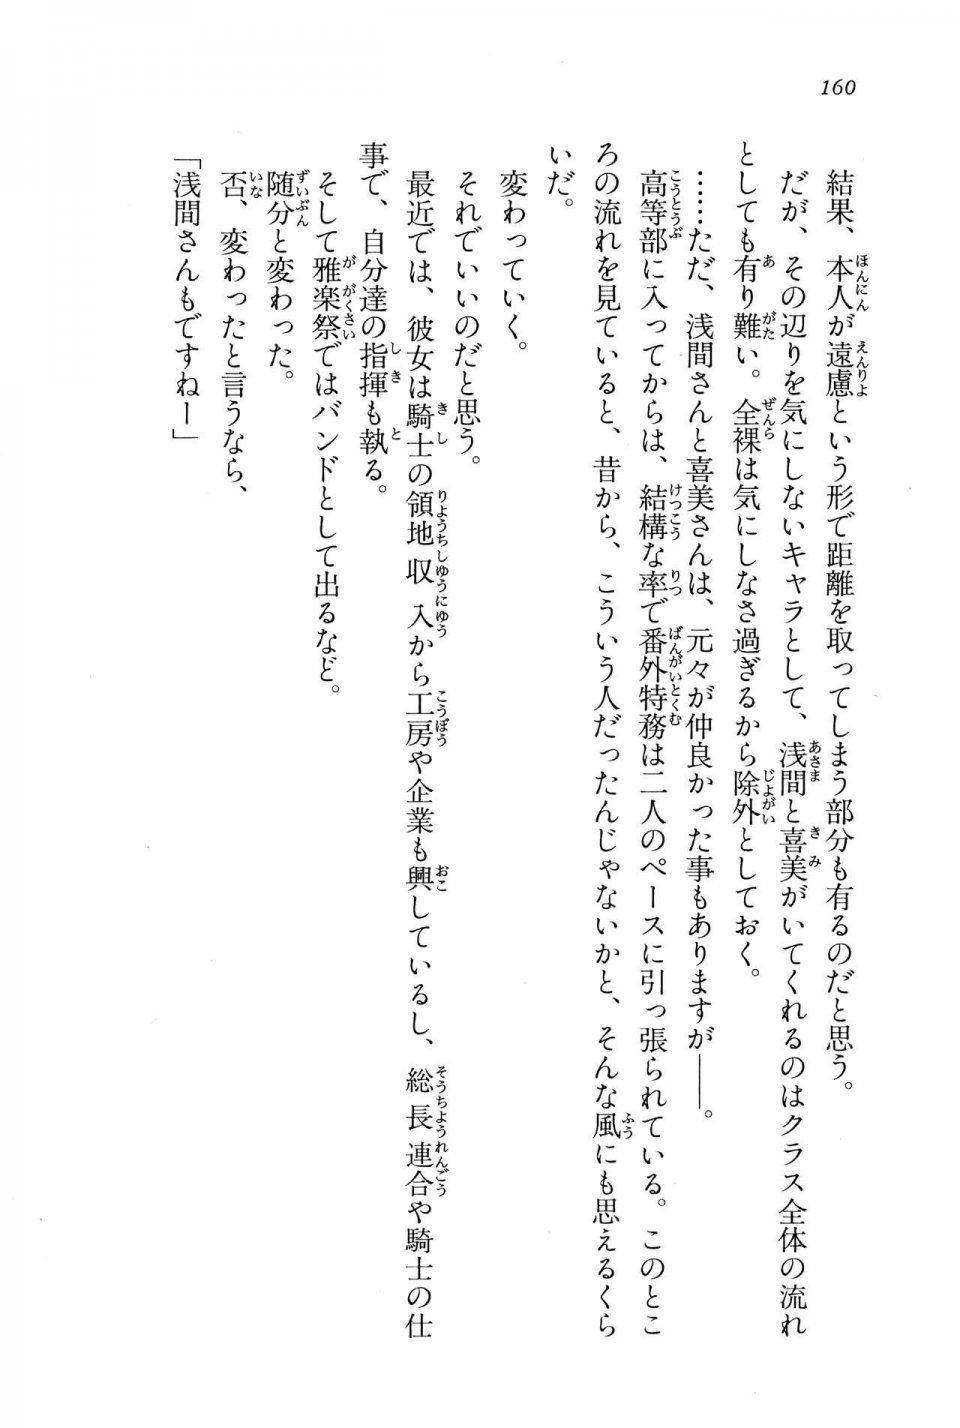 Kyoukai Senjou no Horizon BD Special Mininovel Vol 6(3B) - Photo #164